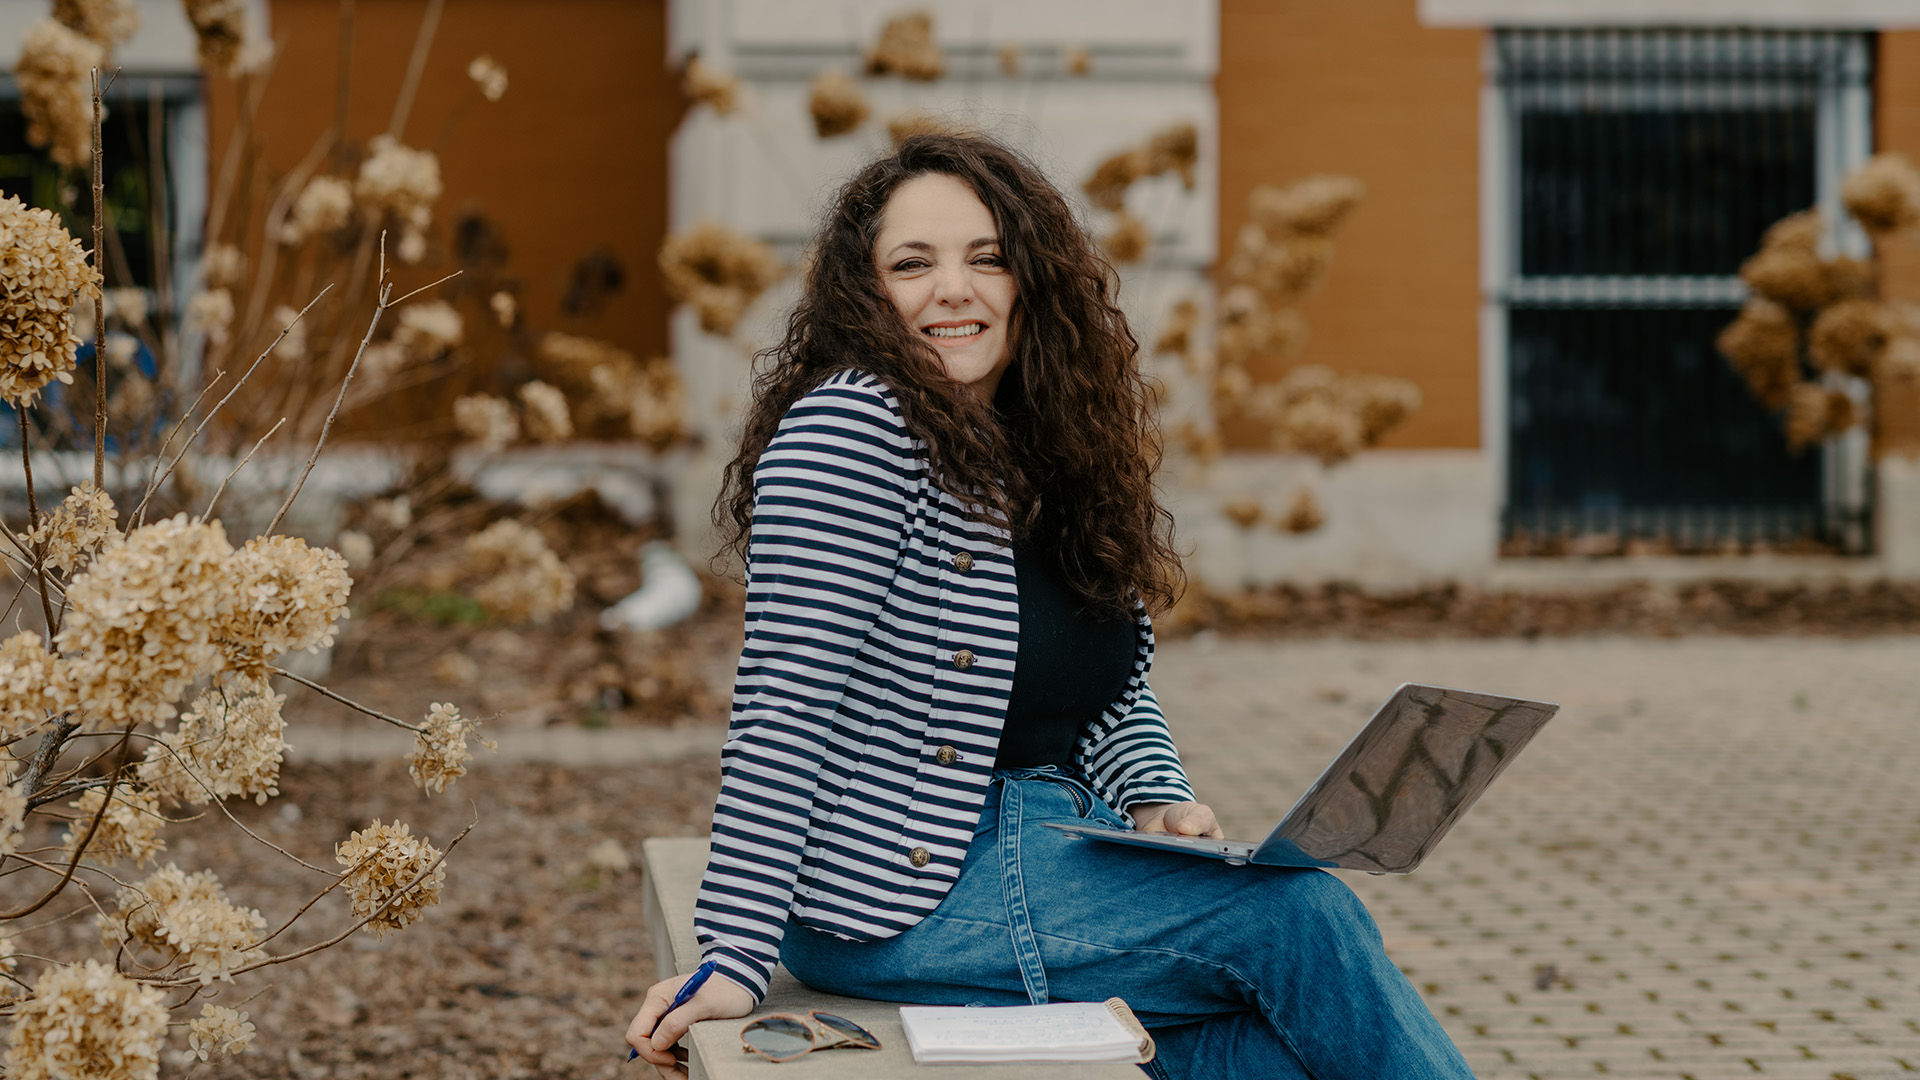 Alejandra Palma sits on a concrete park bench, wearing a navy and white striped jacket, holding an open laptop.